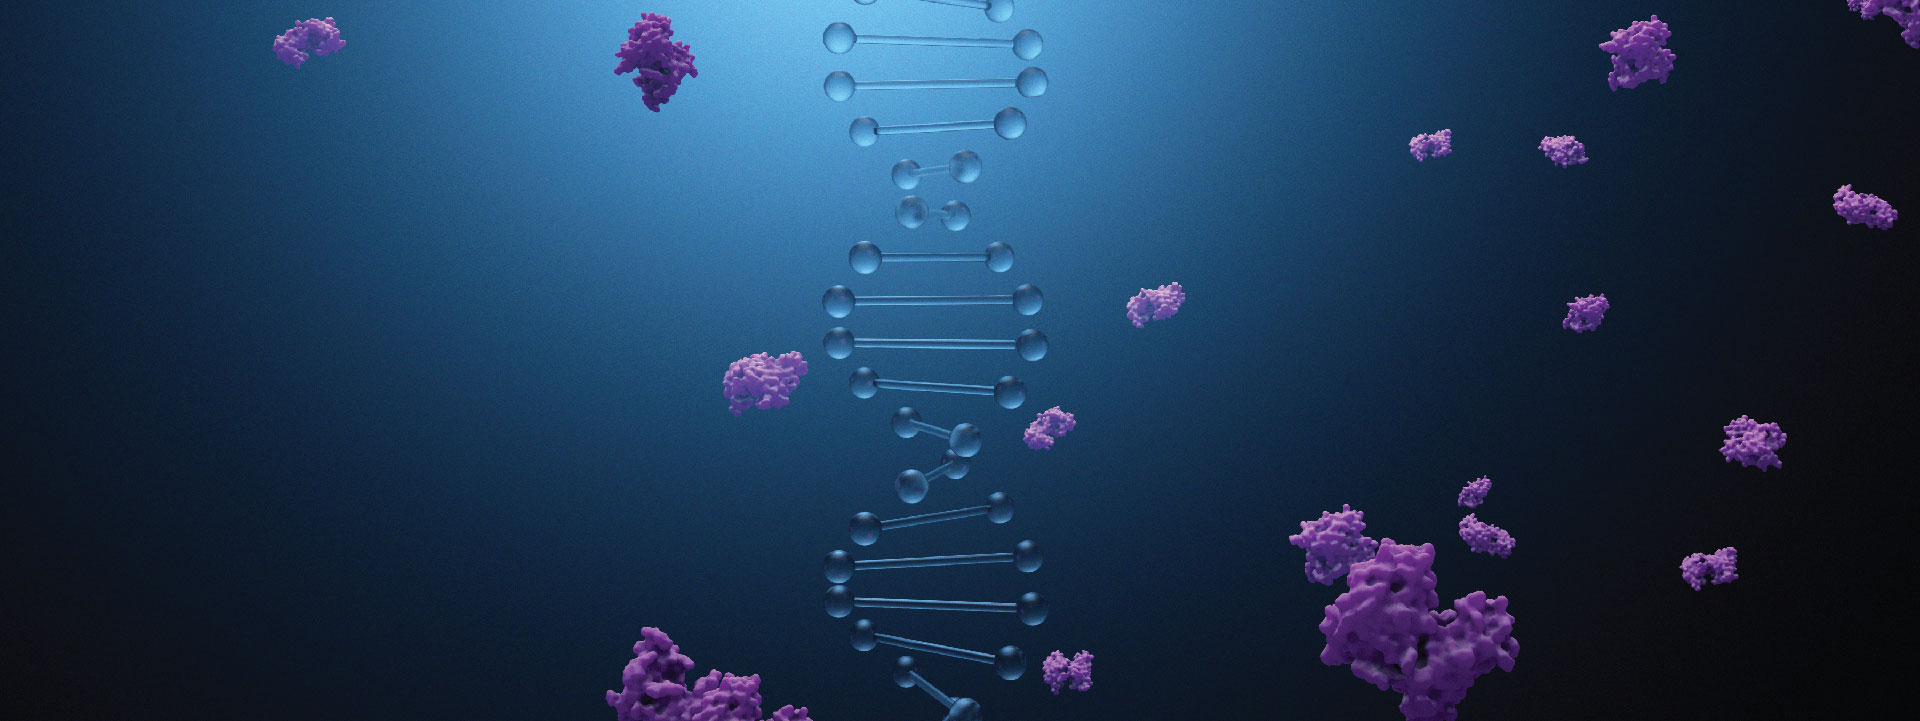 molecular model of DNA strand encoding proteins